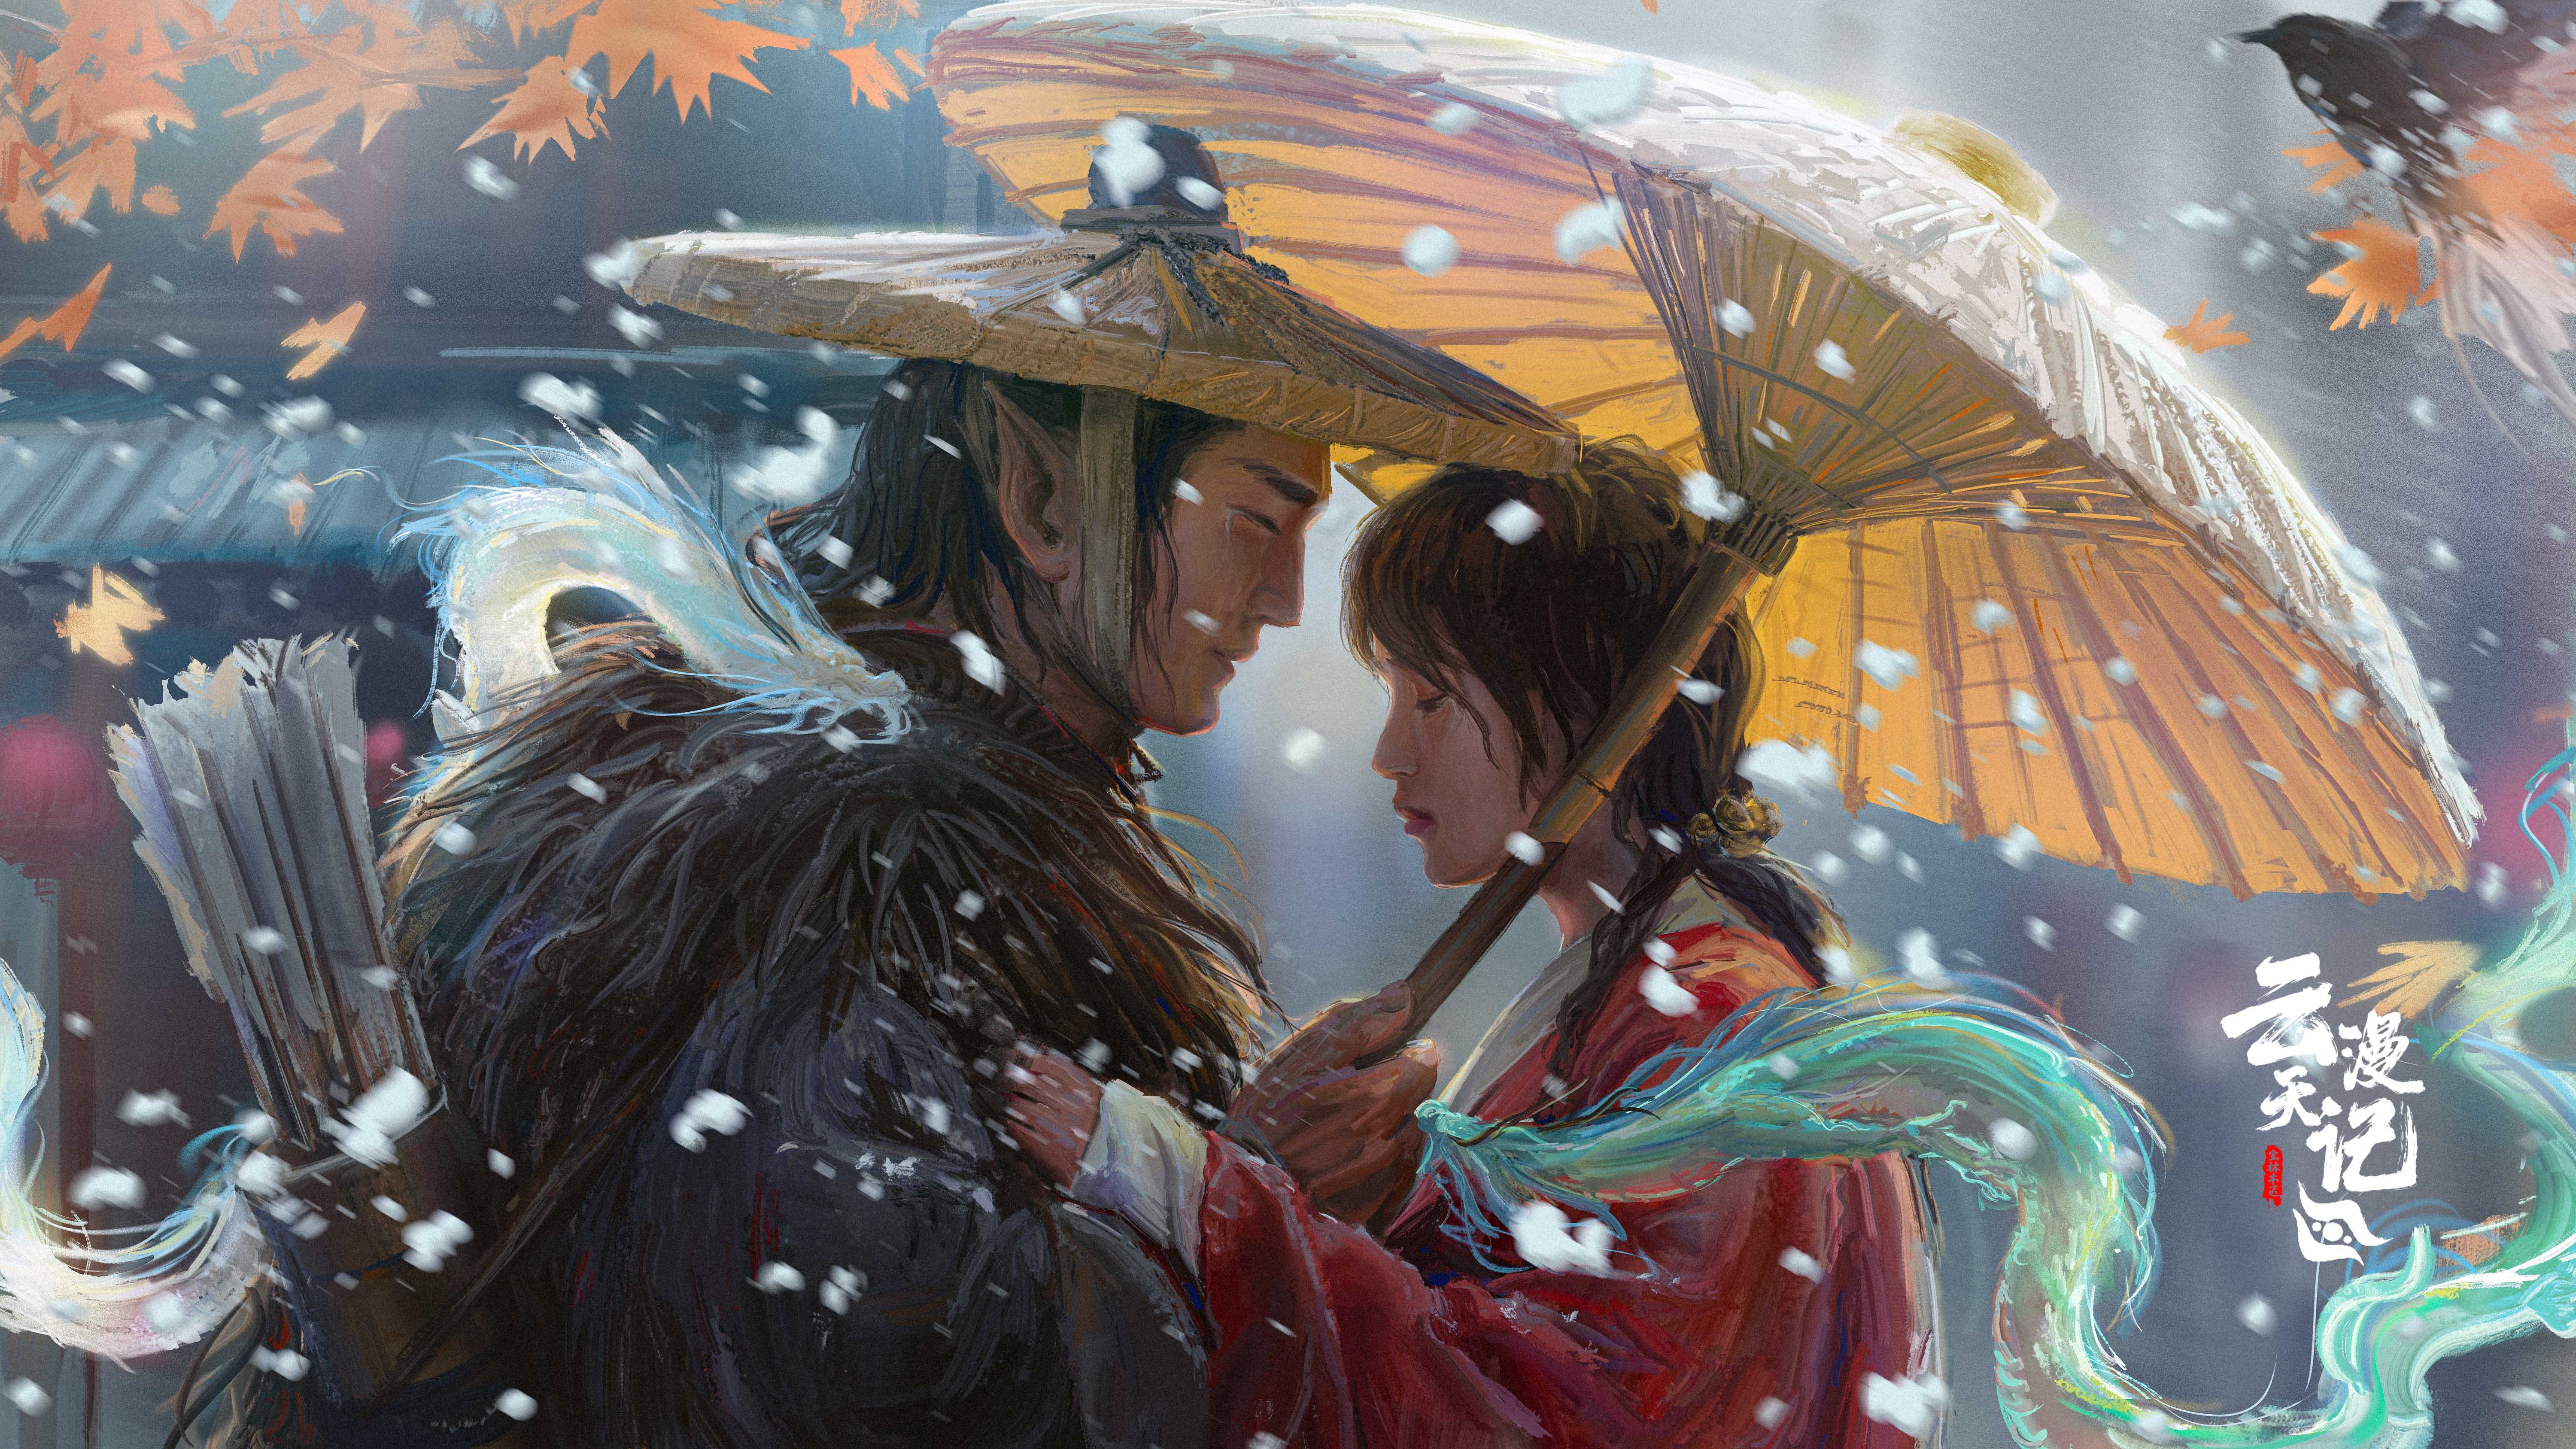 Chibaolin Digital Art Artwork Illustration Fantasy Art Couple Asian Umbrella Closed Eyes Dragon Wate 6000x3375